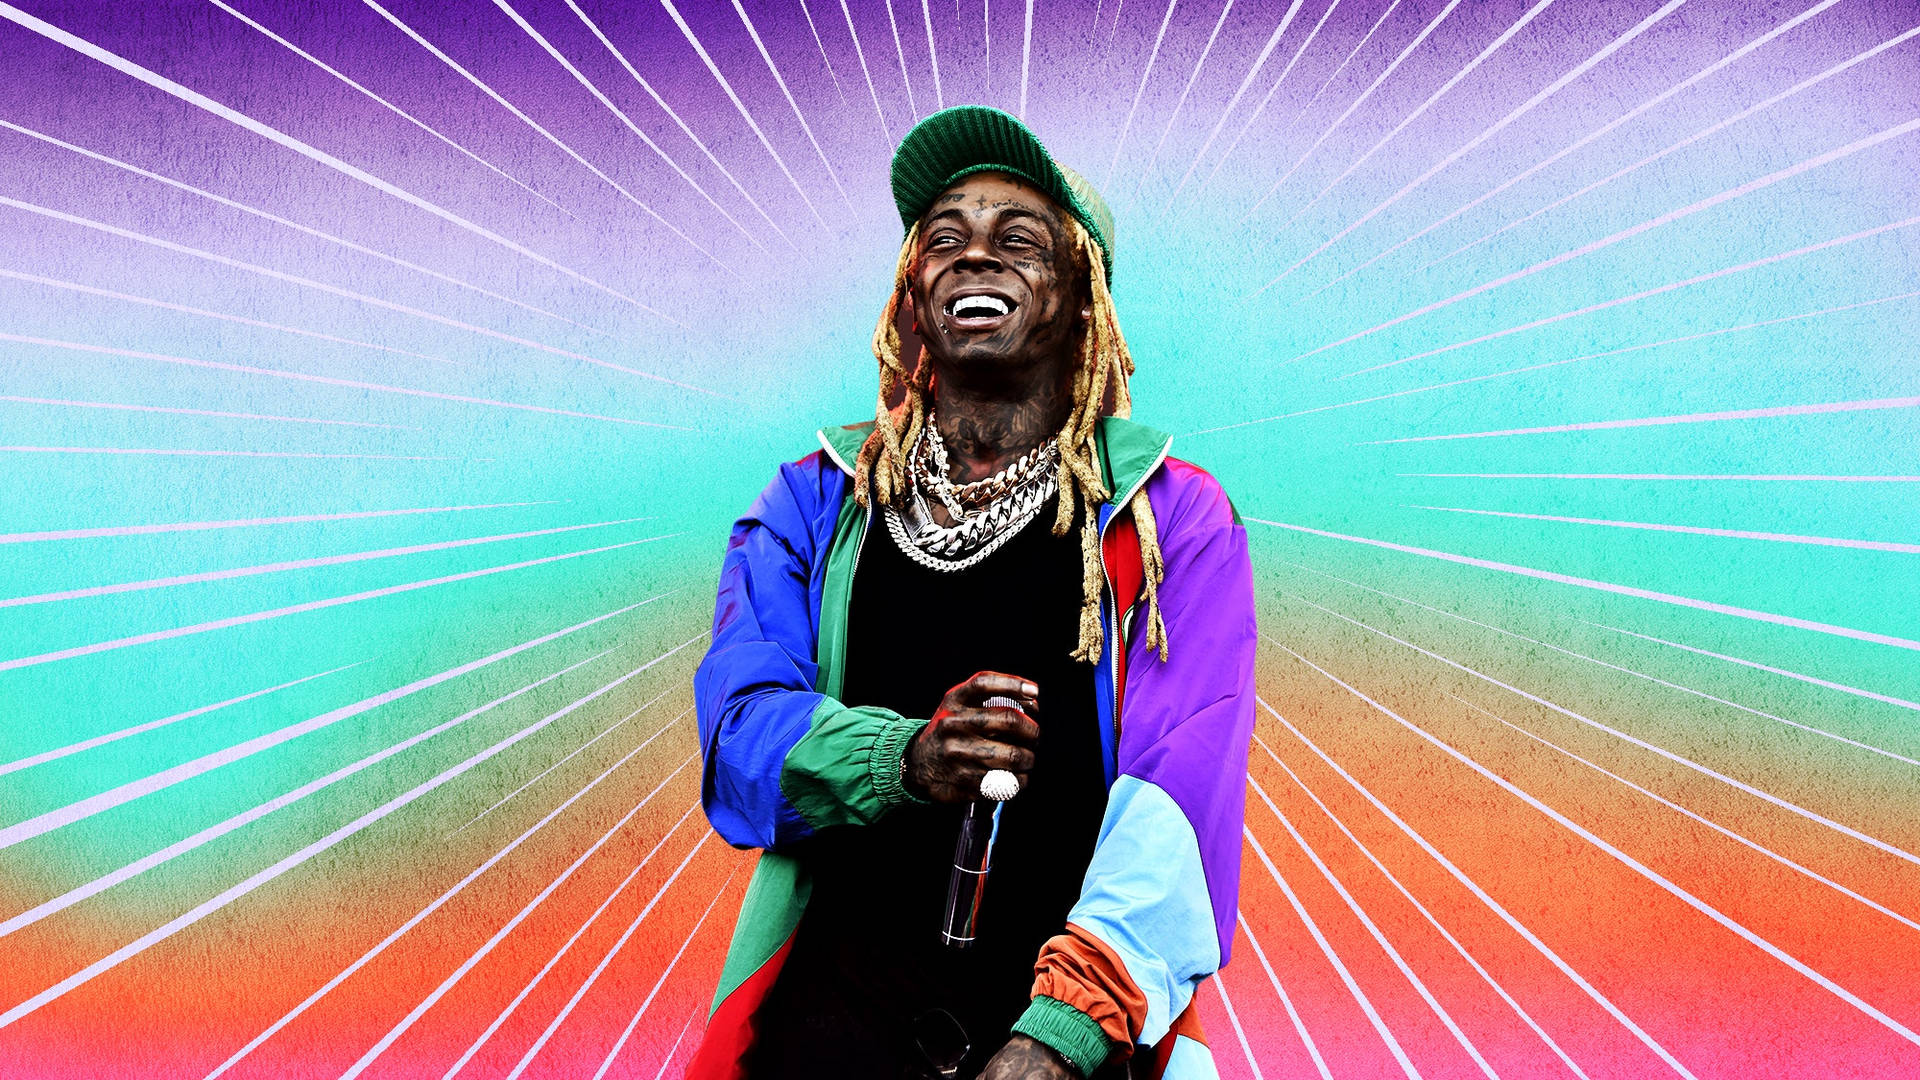 Lil Wayne Colorful Background